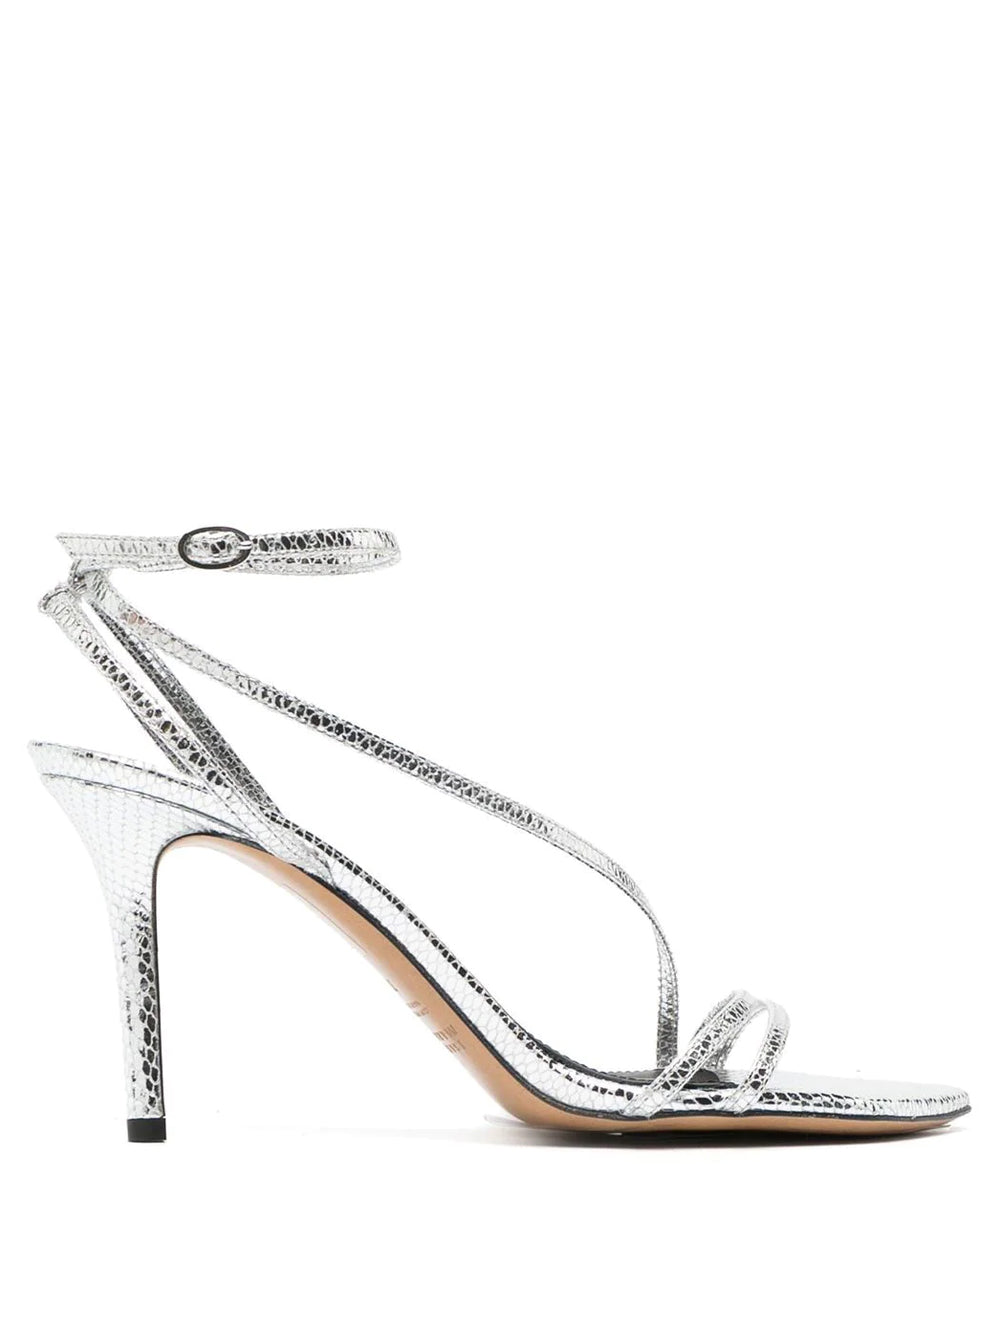 Isabel Marant silver sandals